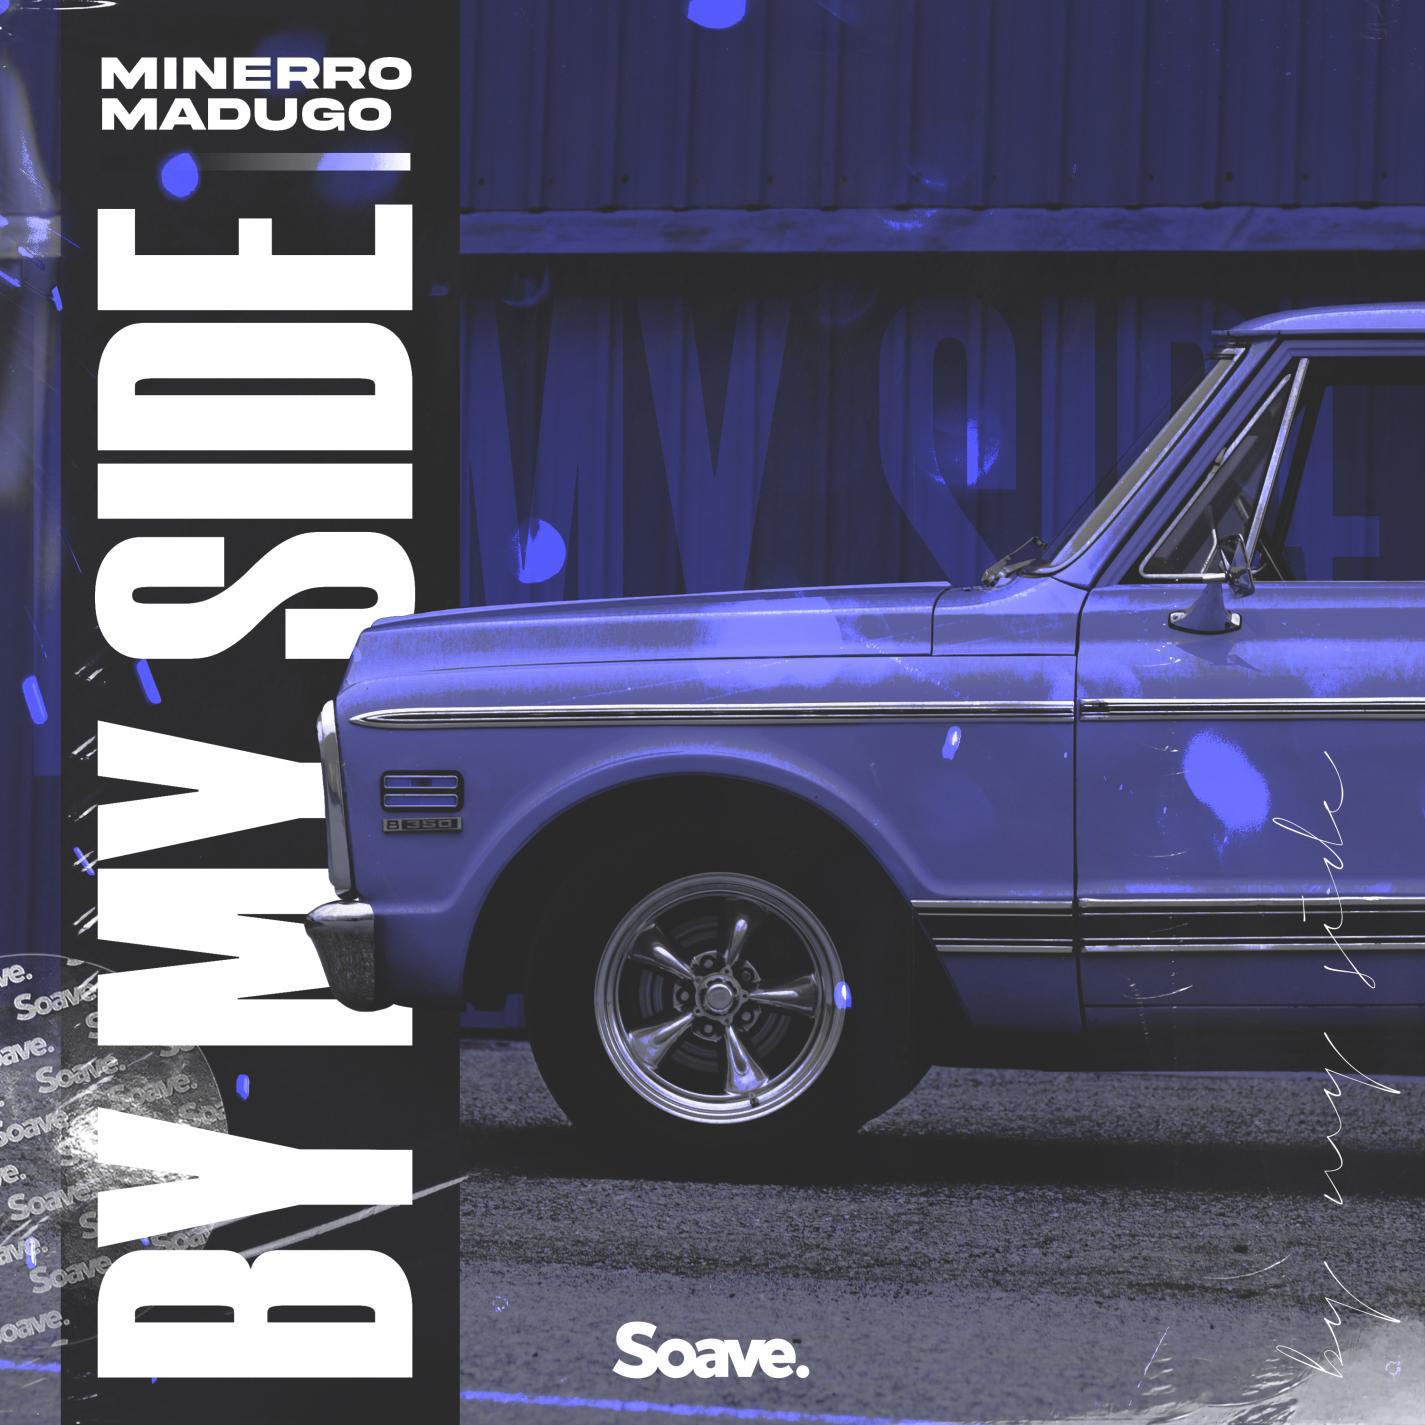 Minerro - By My Side (feat. madugo)